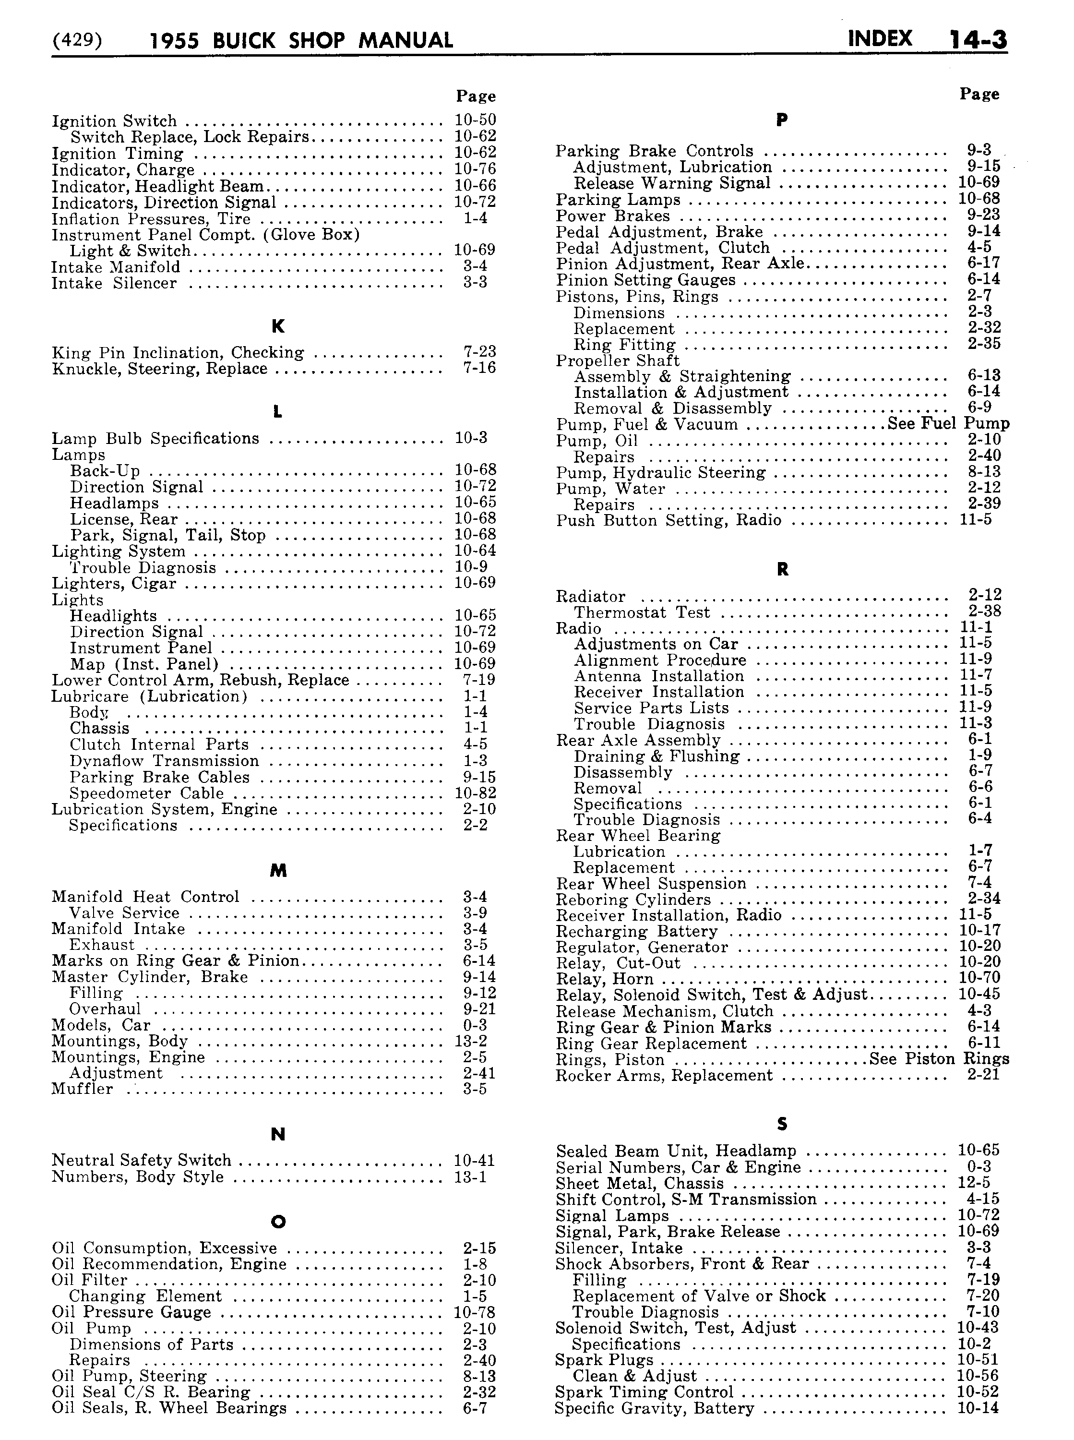 n_15 1955 Buick Shop Manual - Index-003-003.jpg